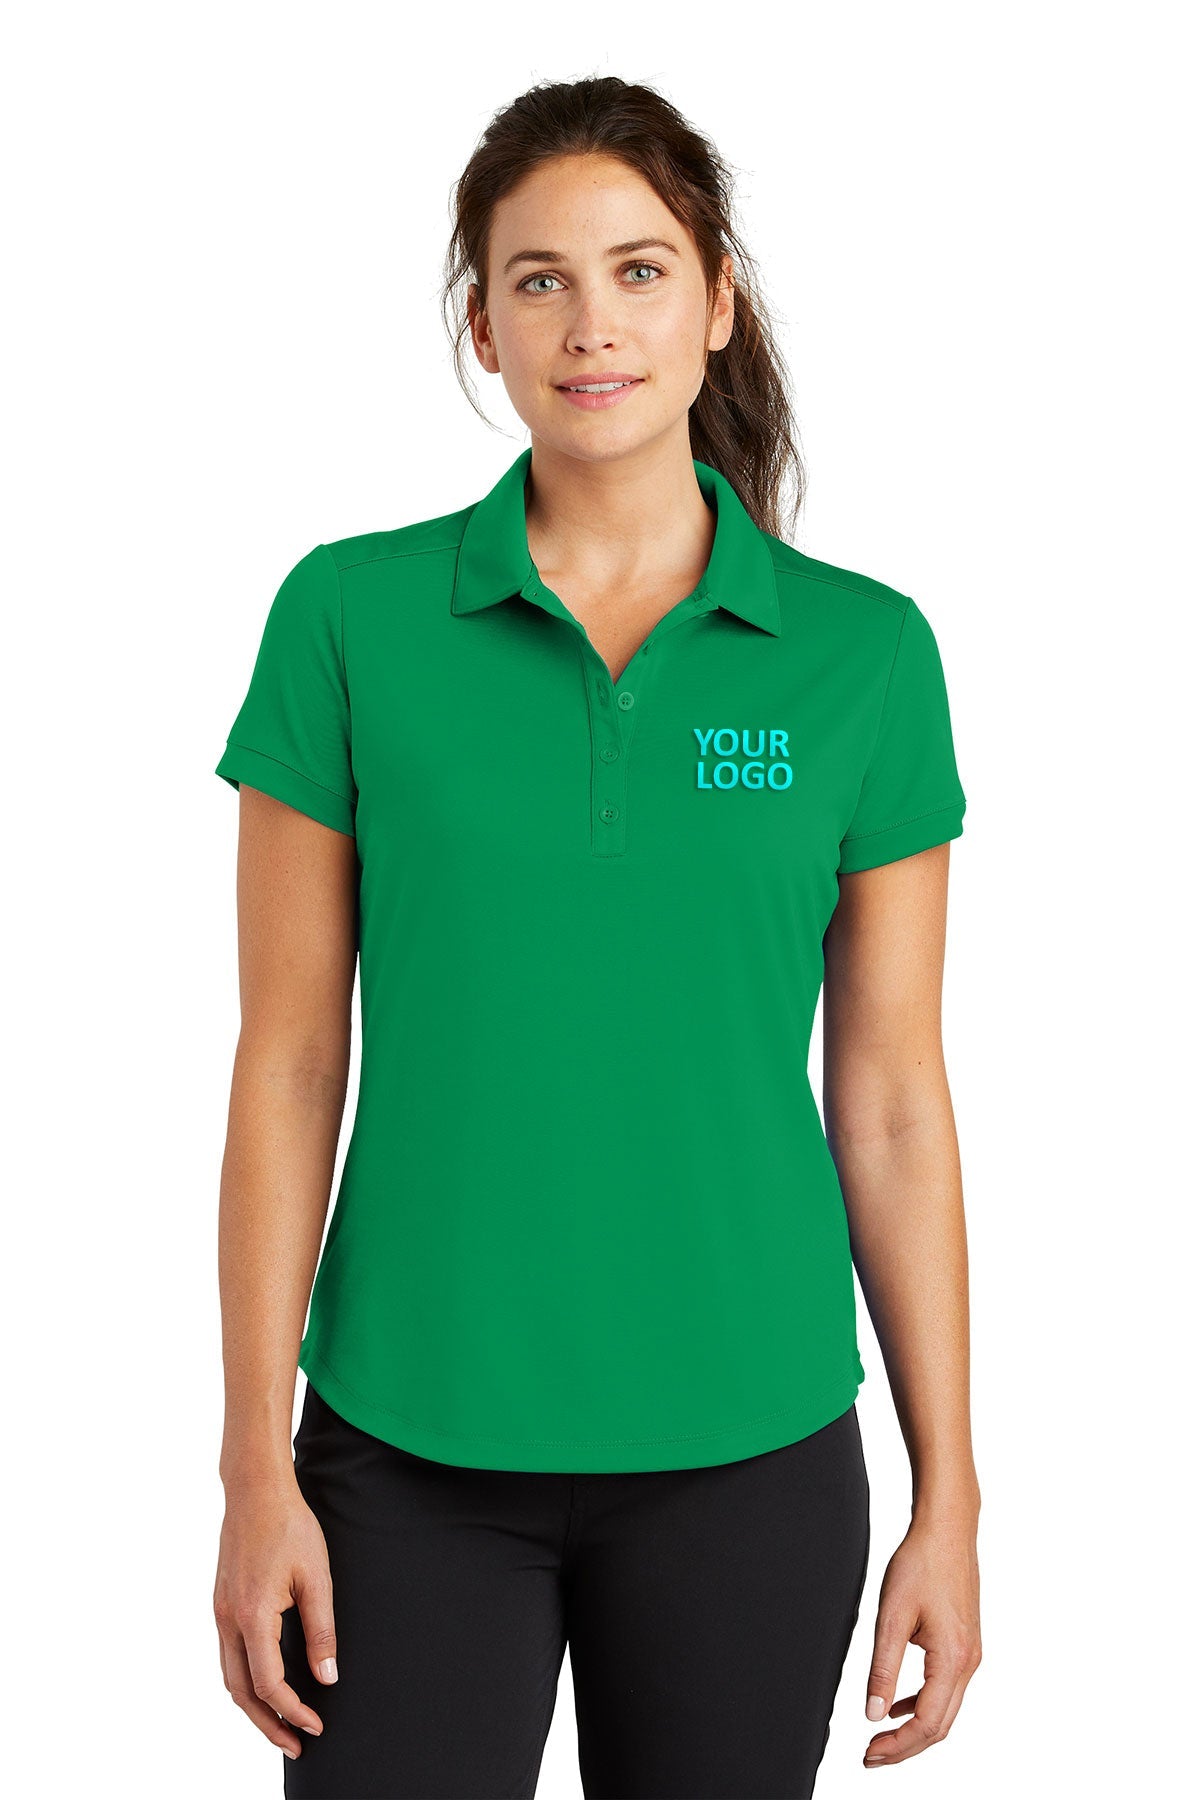 nike pine green 811807 order custom polo shirts